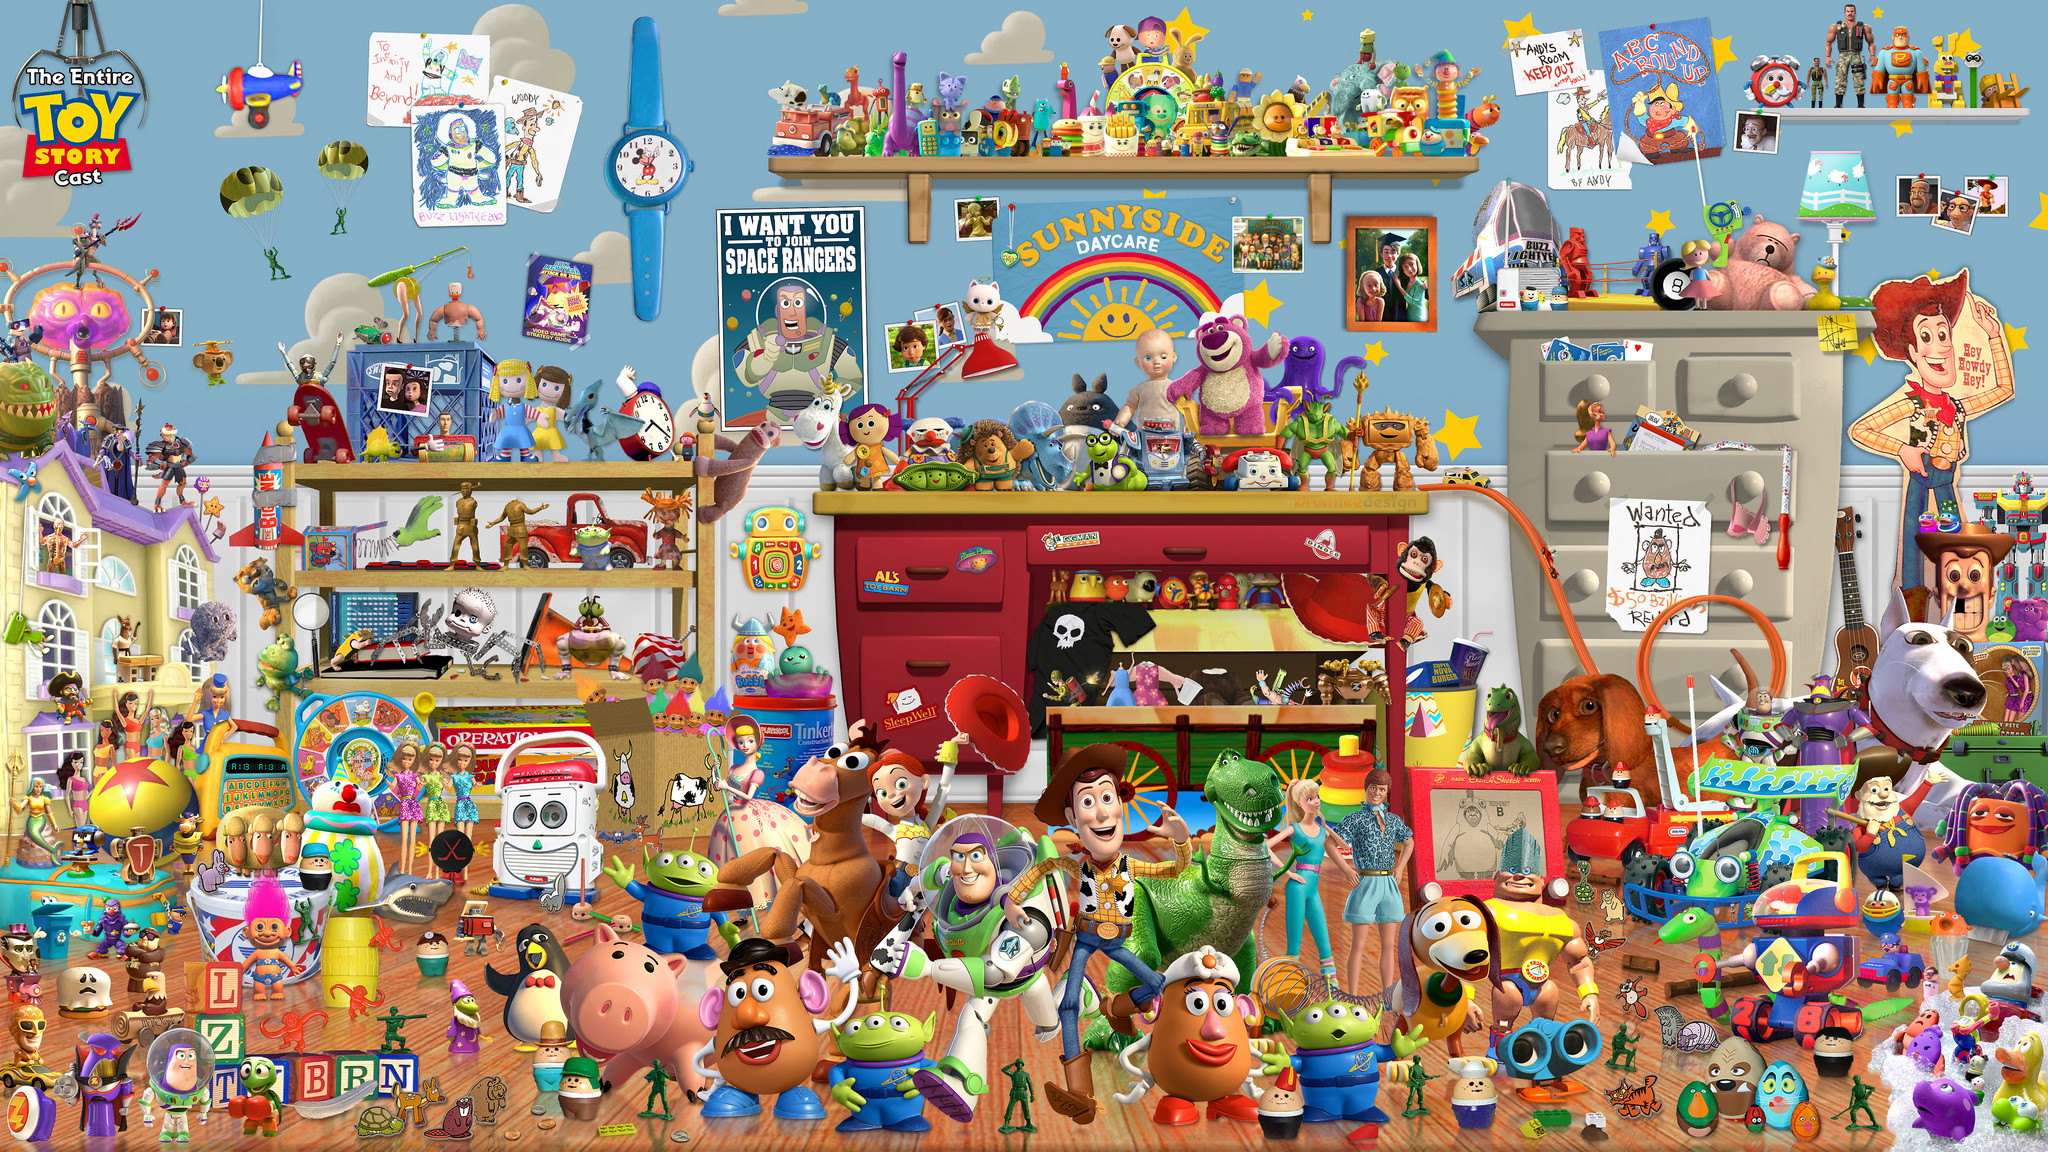 Toy Story Wallpaper for Desktop